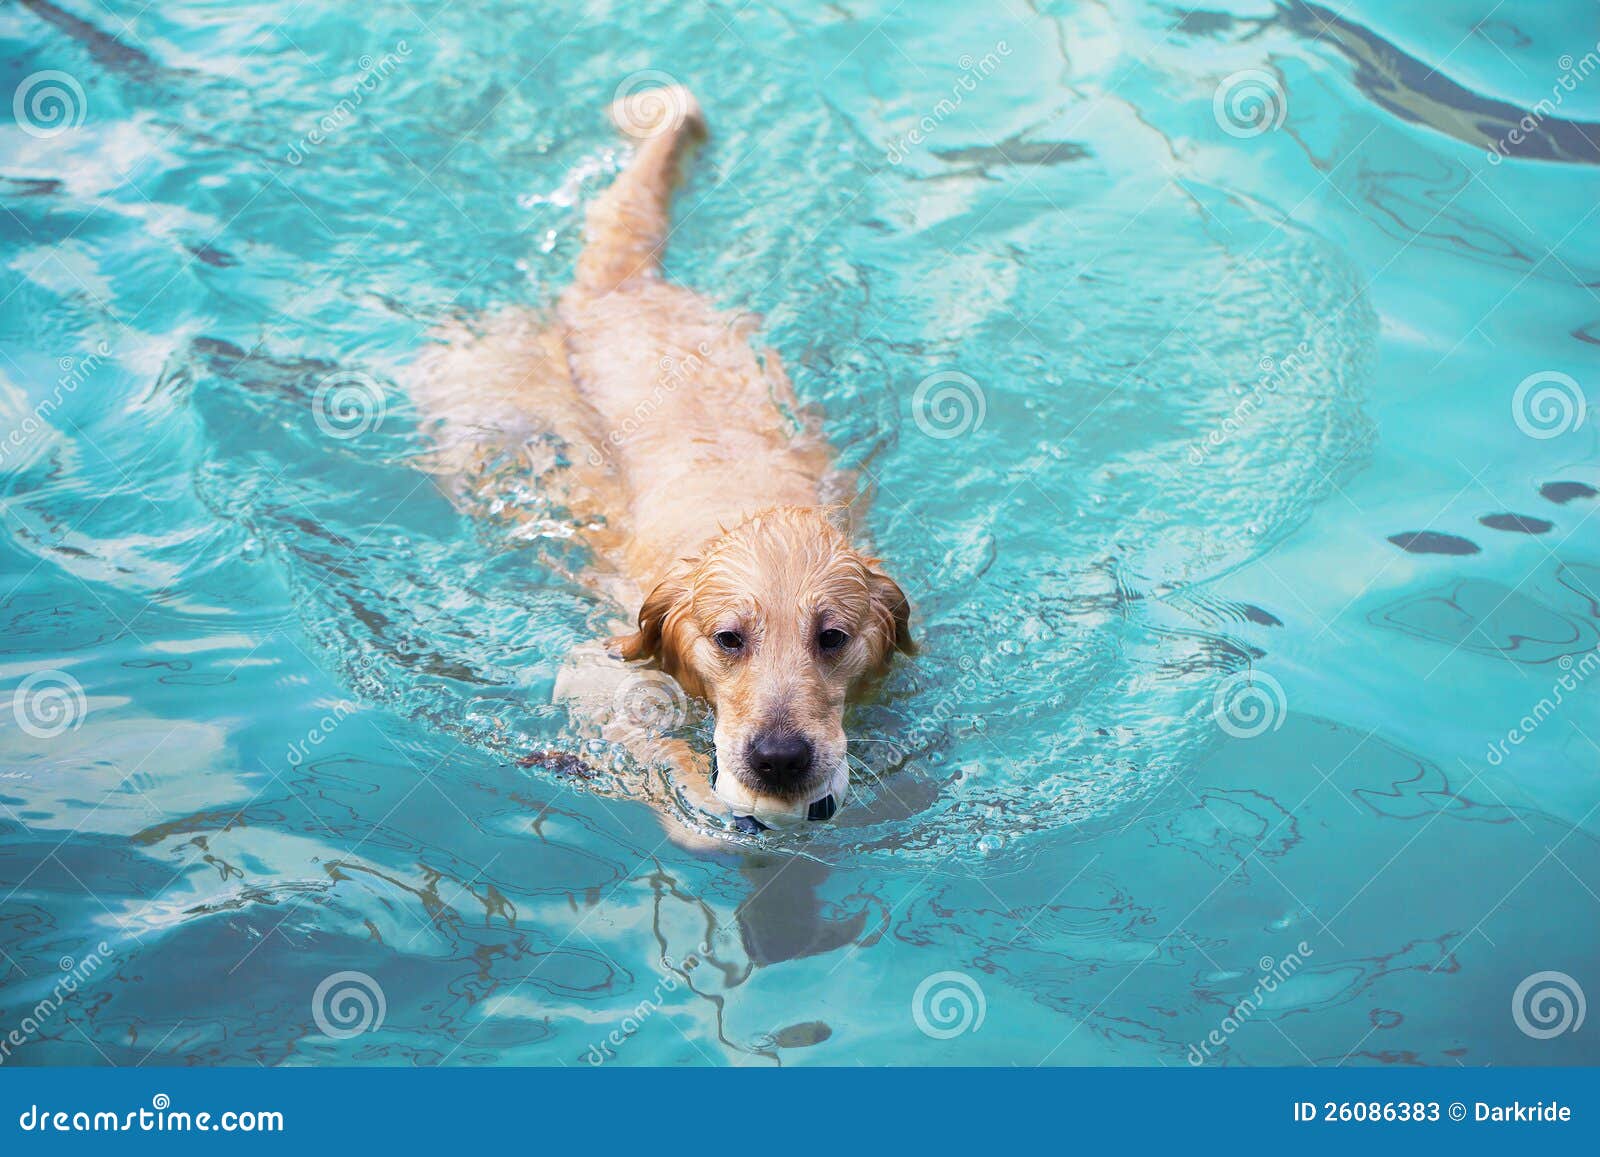 clipart dog swimming - photo #32